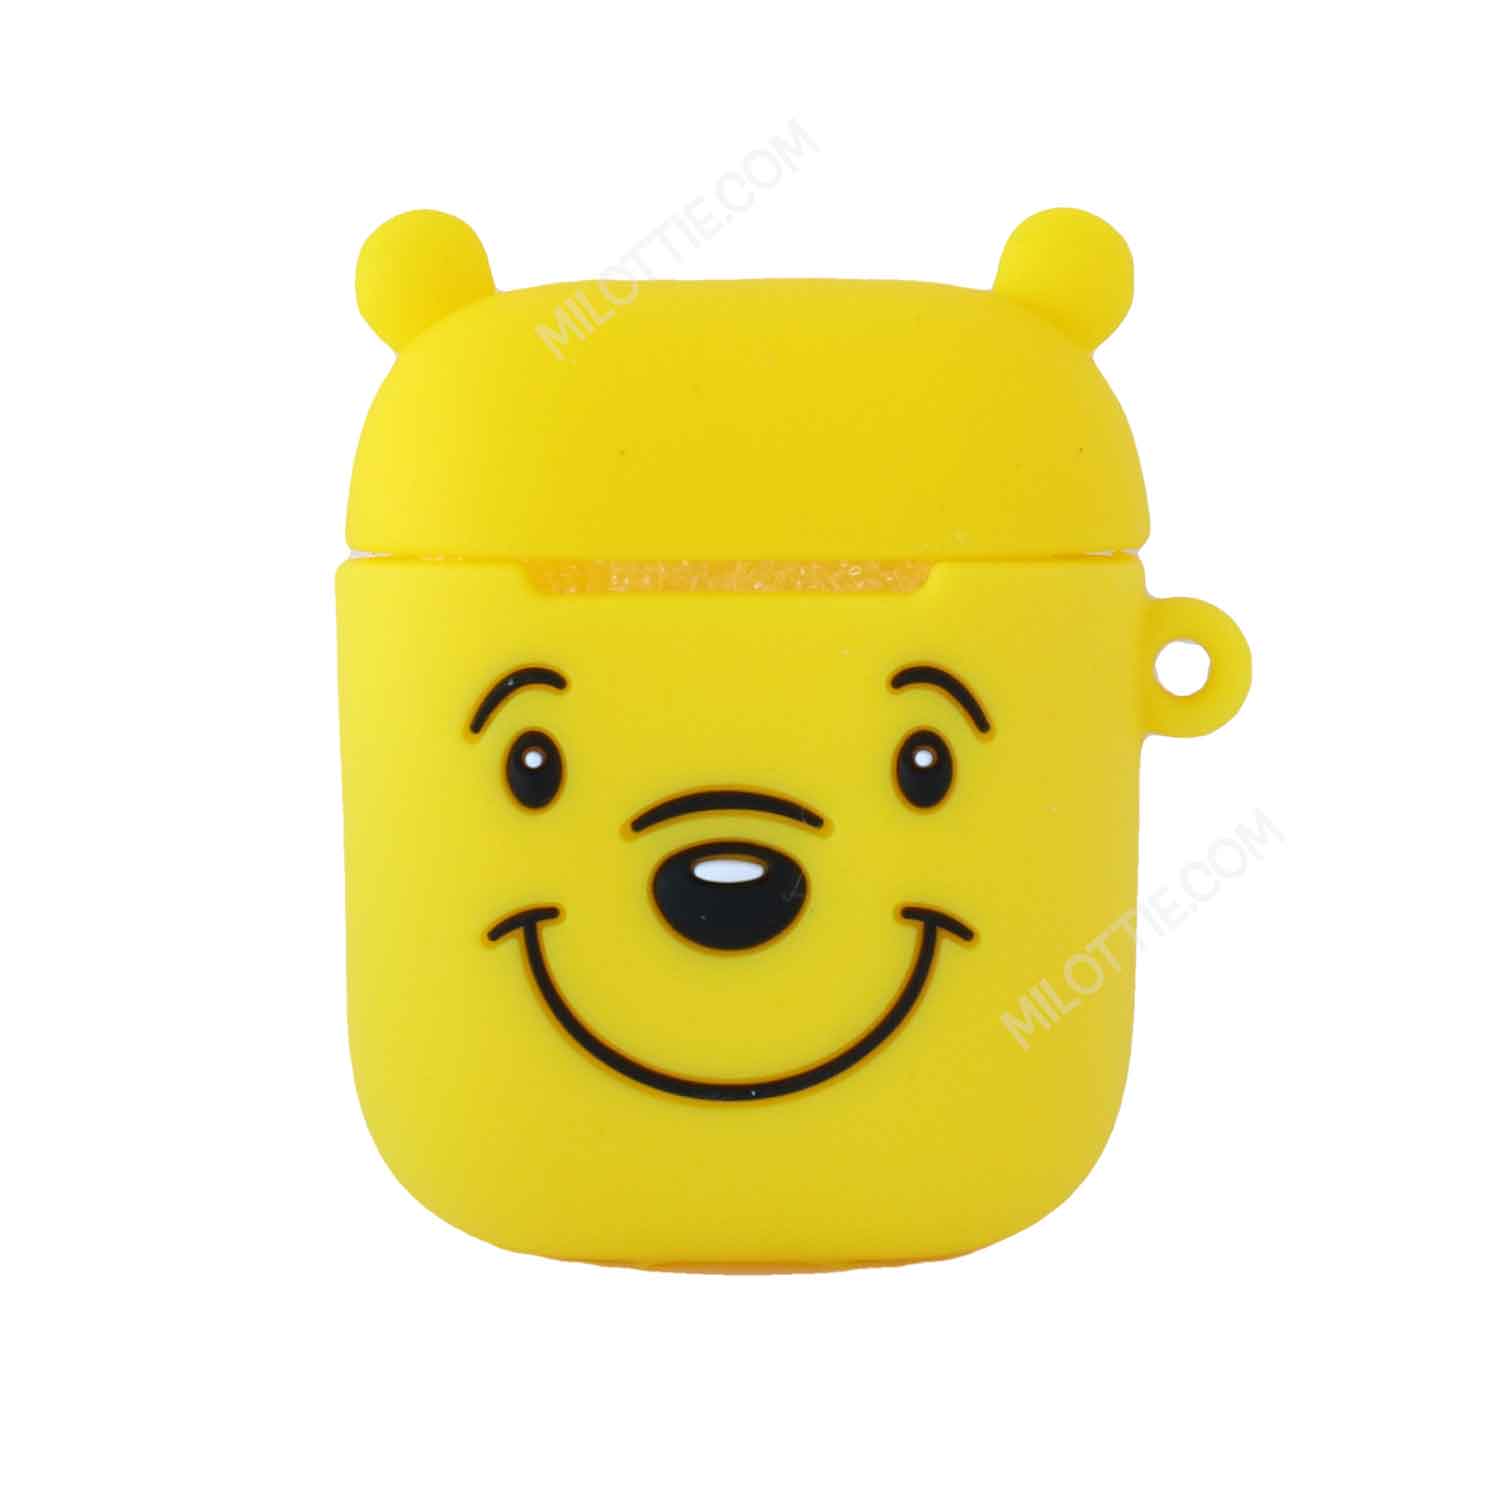 Winnie the Pooh Airpods Case